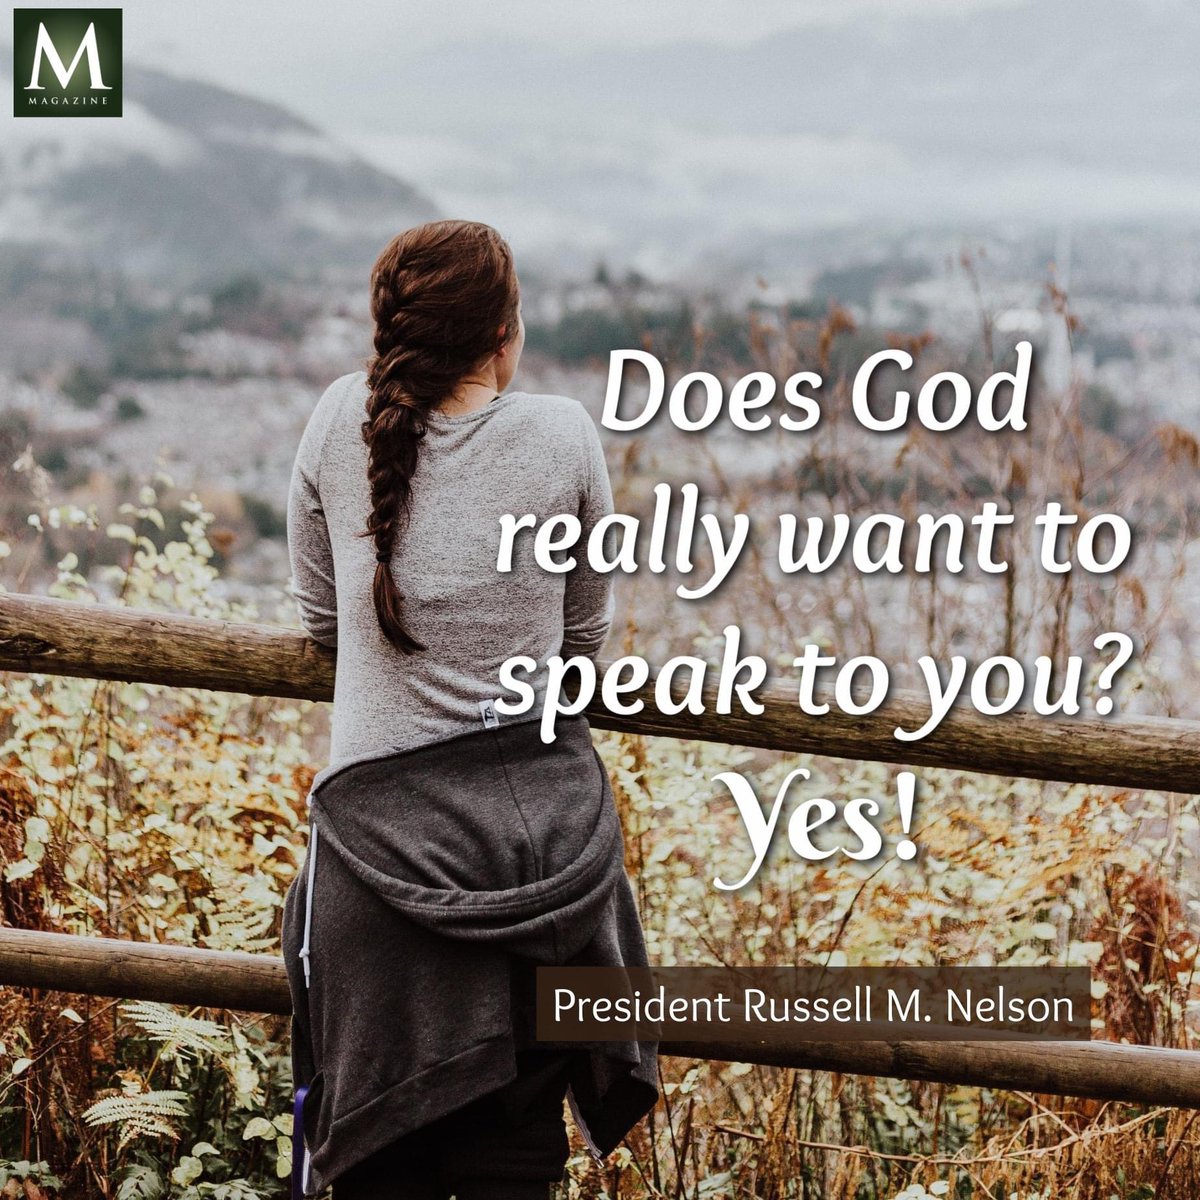 'Does God really want to speak to you? Yes!' ~ President Russell M. Nelson 

#PrayHeIsThere #HearHim #TrustGod #GodLovesYou #ComeUntoChrist #CountOnHim #EmbraceHim #ChildOfGod #ShareGoodness #TheChurchOfJesusChristOfLatterDaySaints